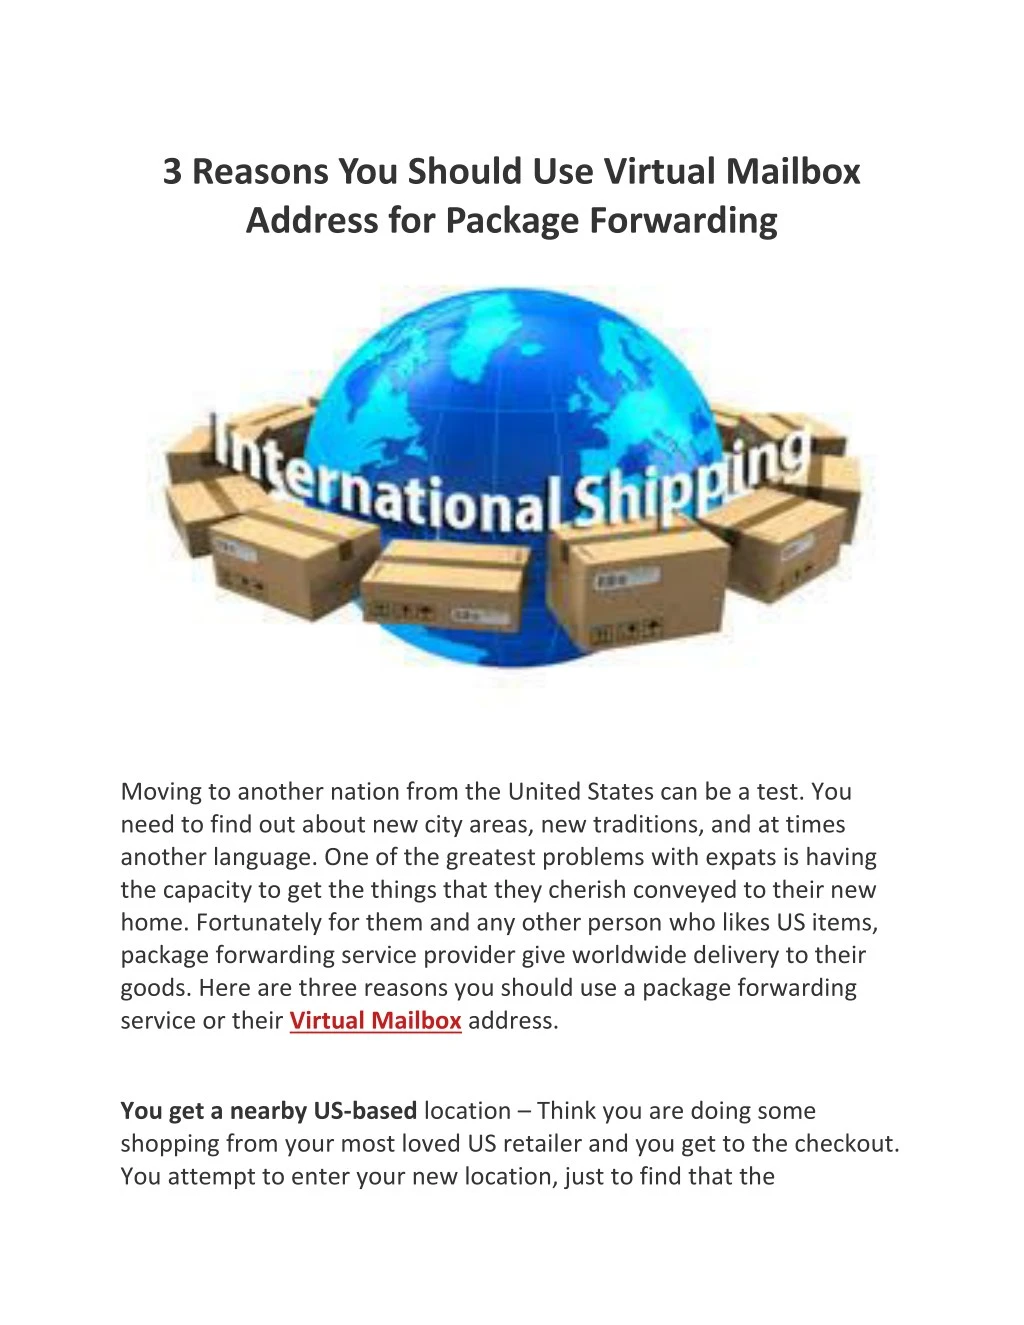 3 reasons you should use virtual mailbox address